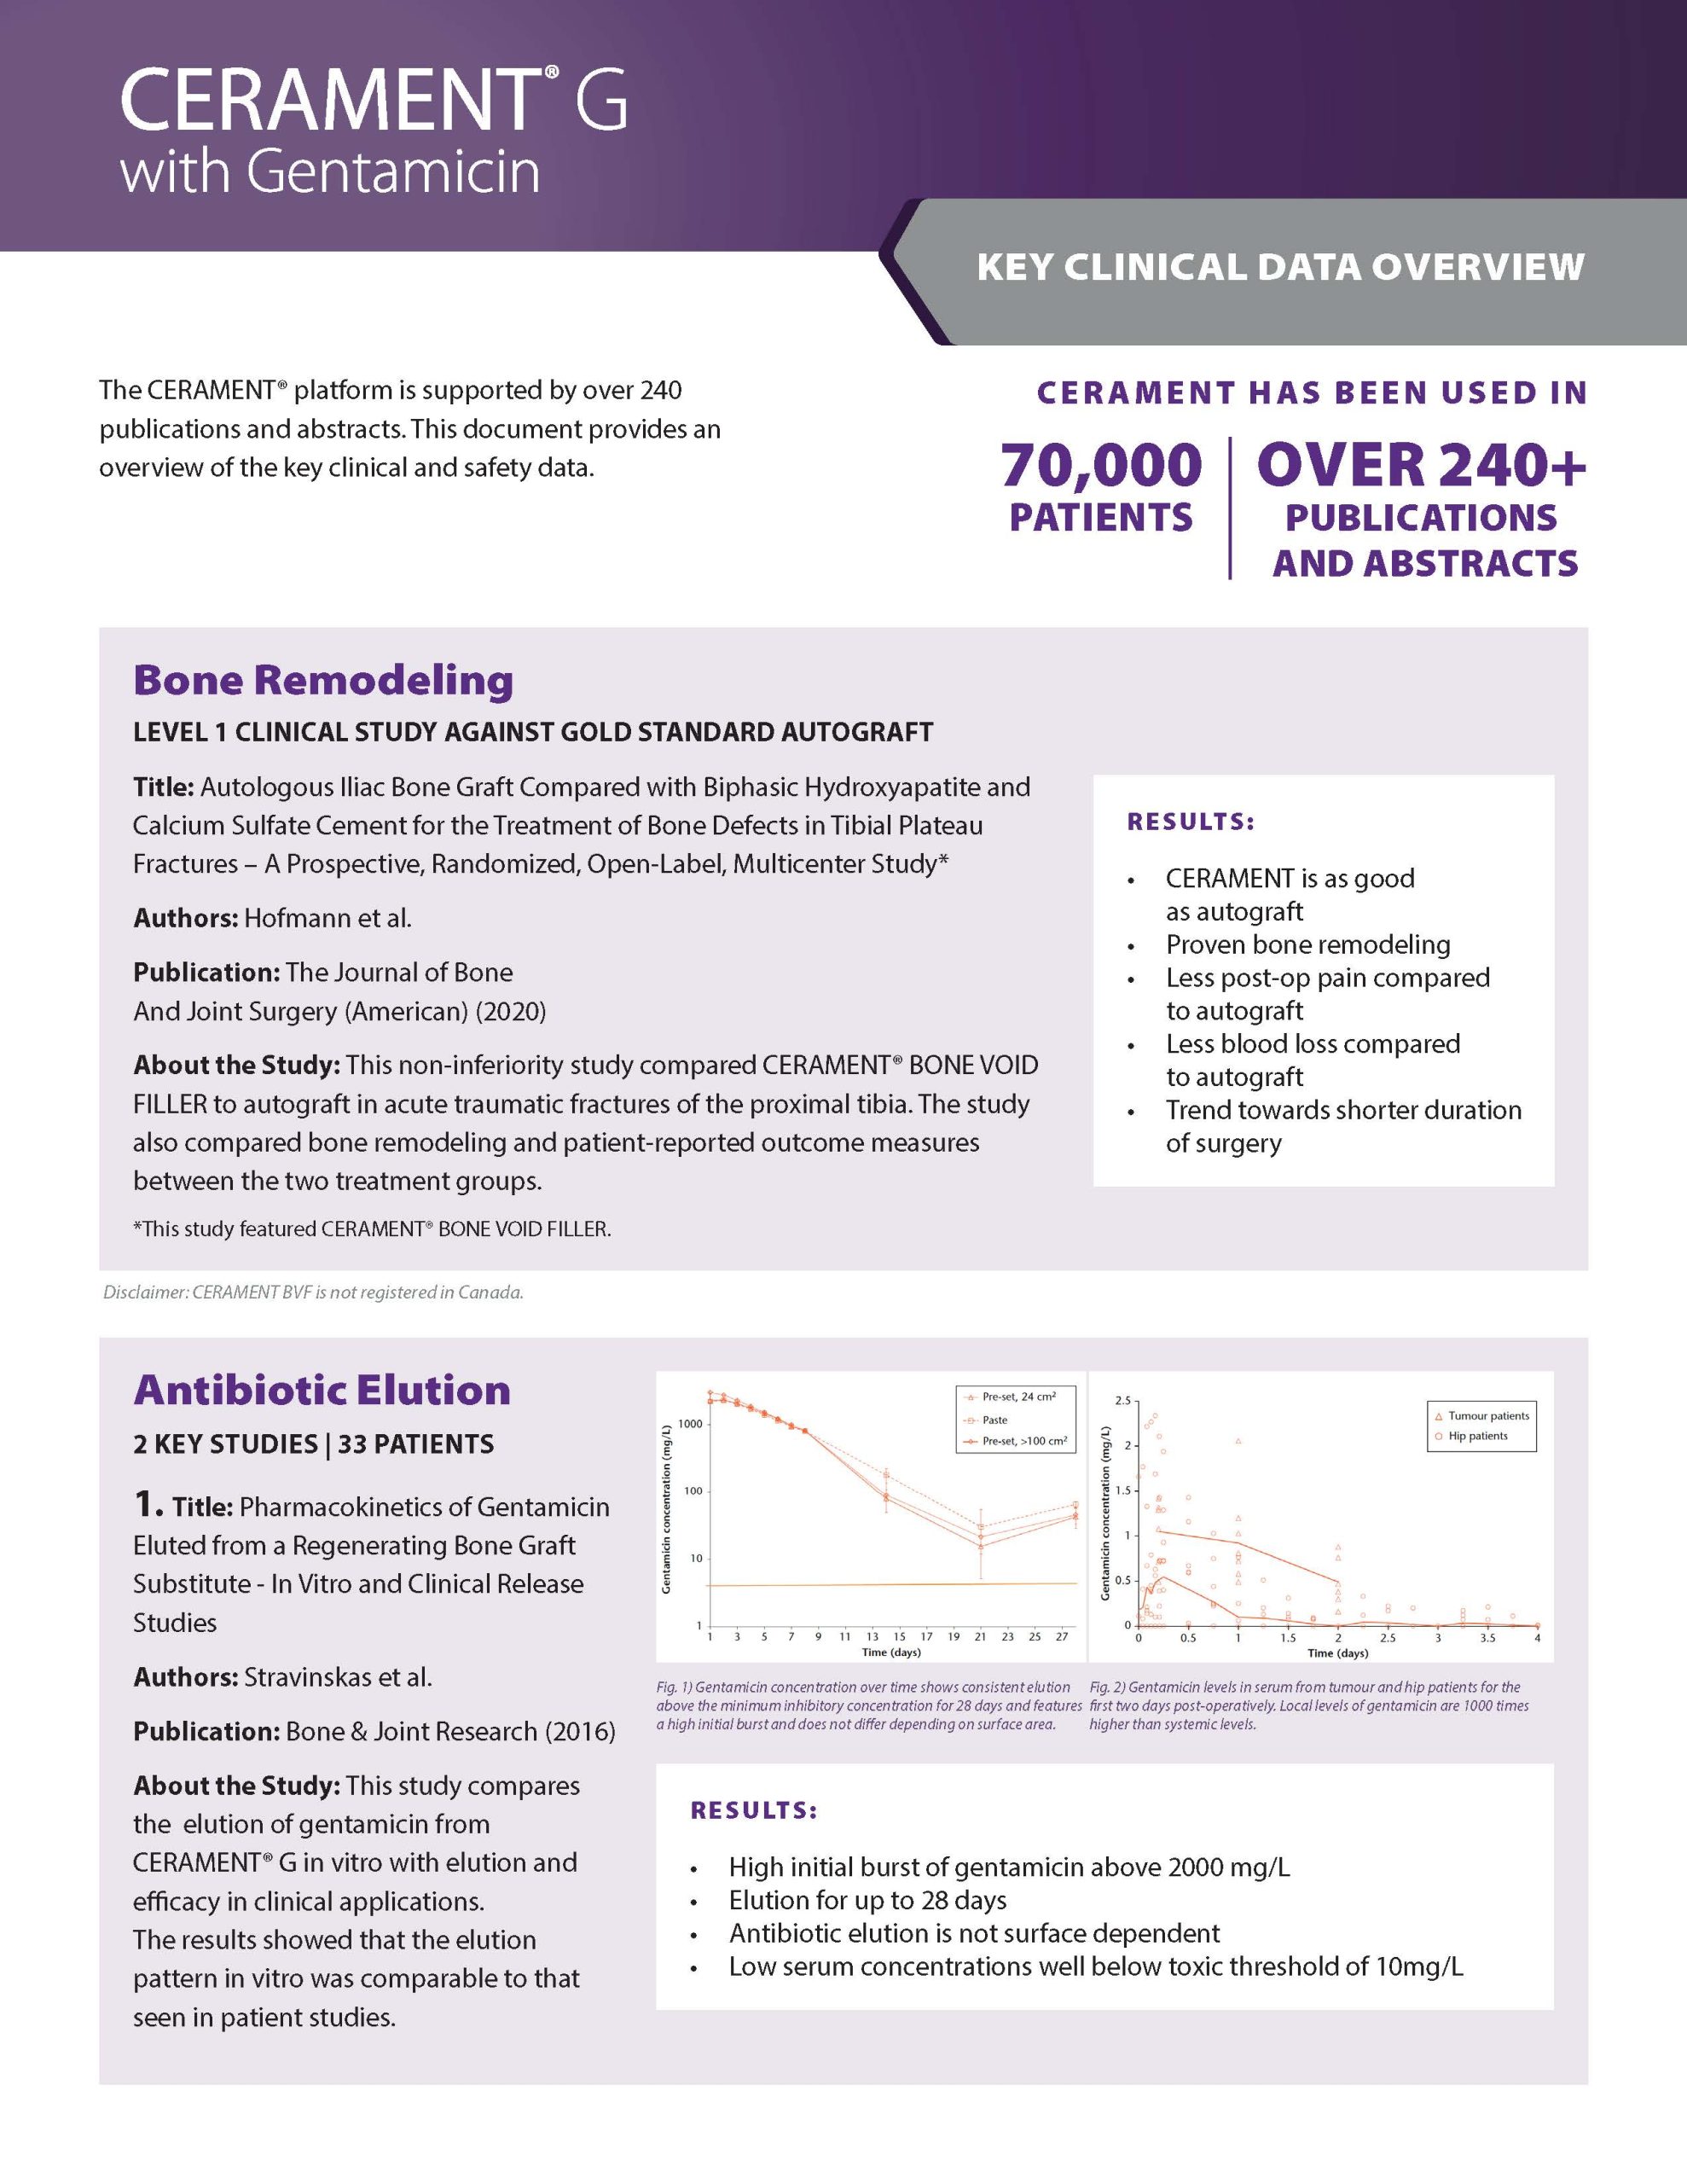 CERAMENT G Key Clinical Data Overview